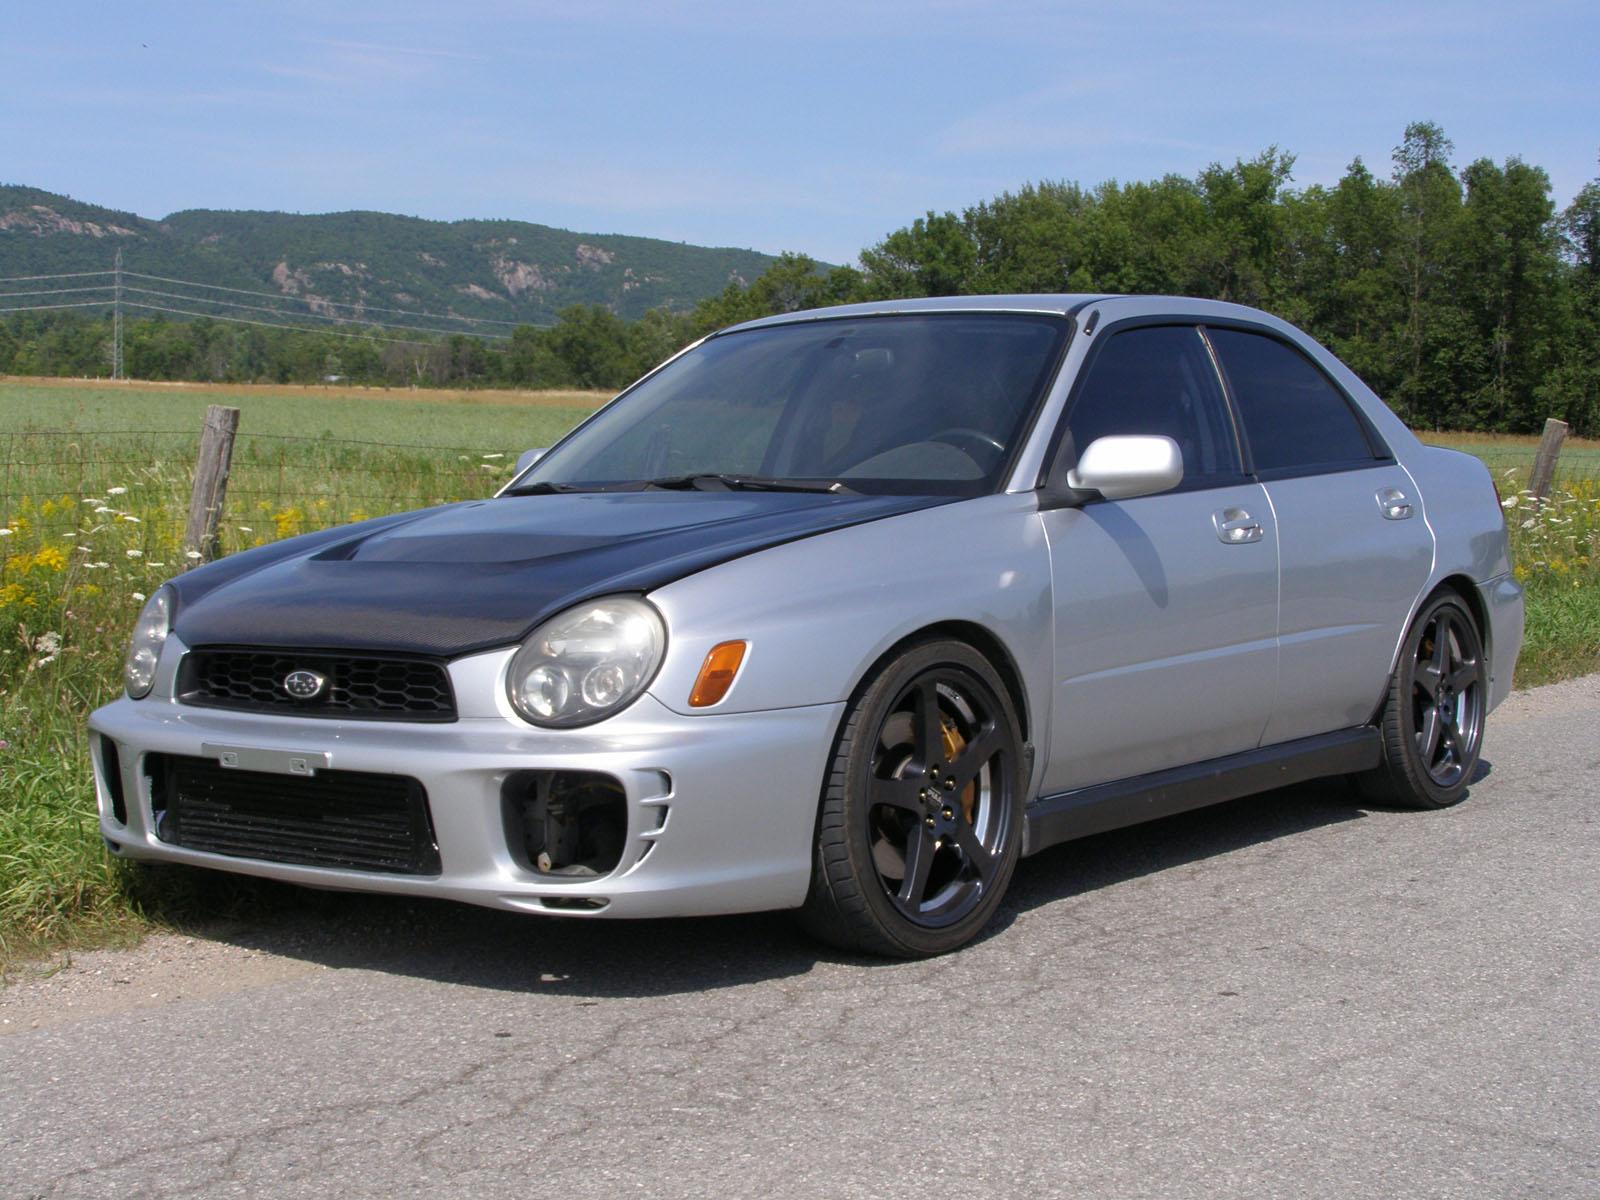 Импреза 2000 год. Subaru Impreza 2002. Subaru Impreza WRX 2002. Subaru Impreza WRX 2000. Subaru Impreza Wagon 2002.